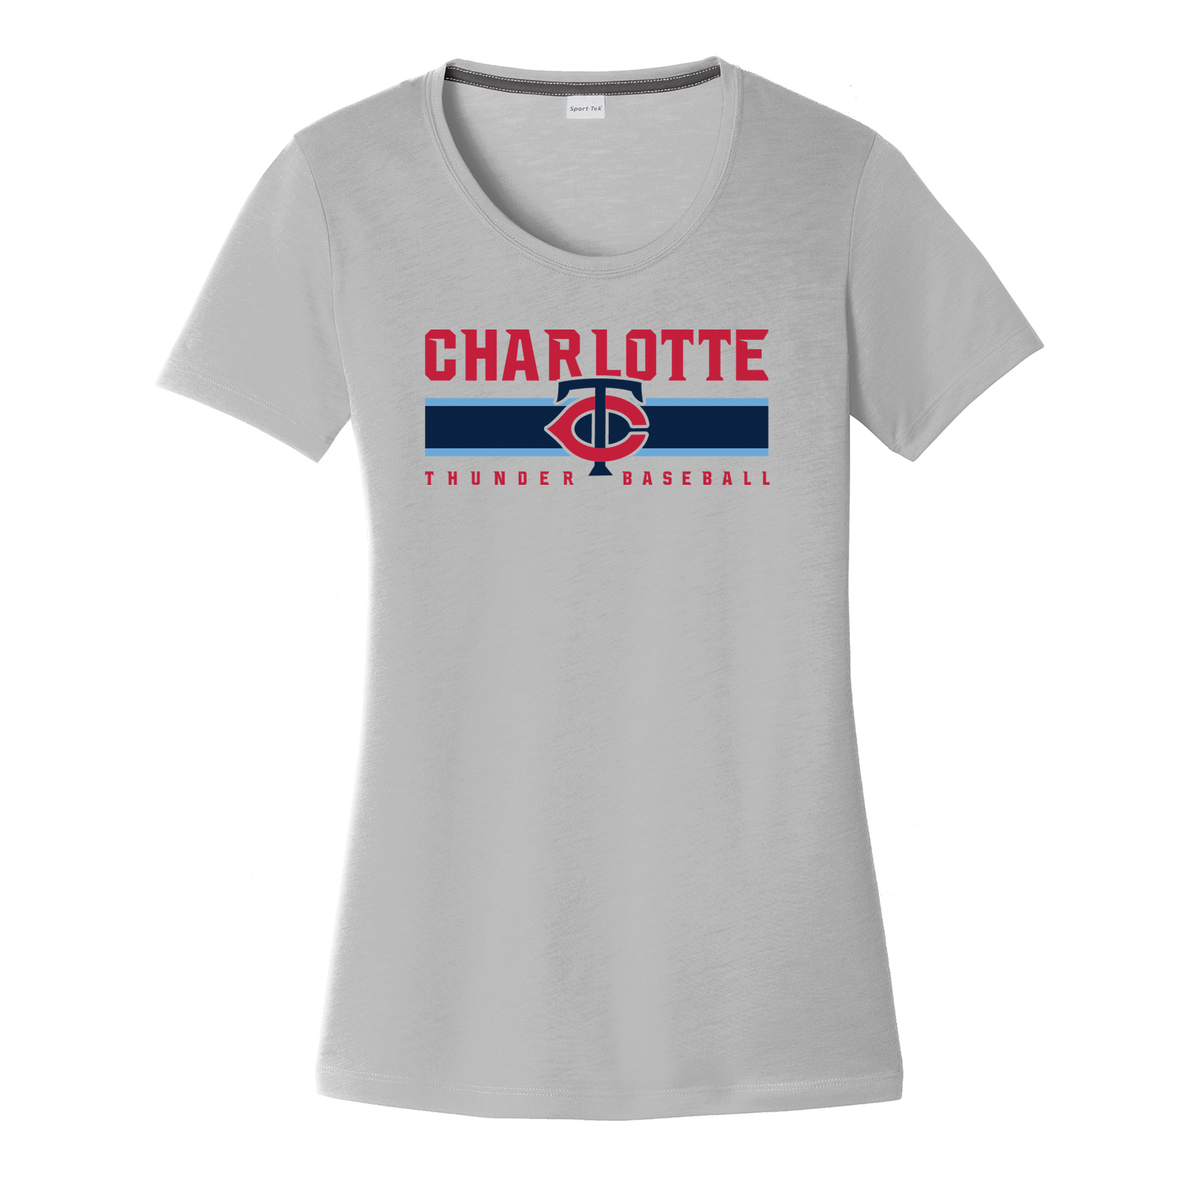 Charlotte Thunder Baseball  Women's CottonTouch Performance T-Shirt